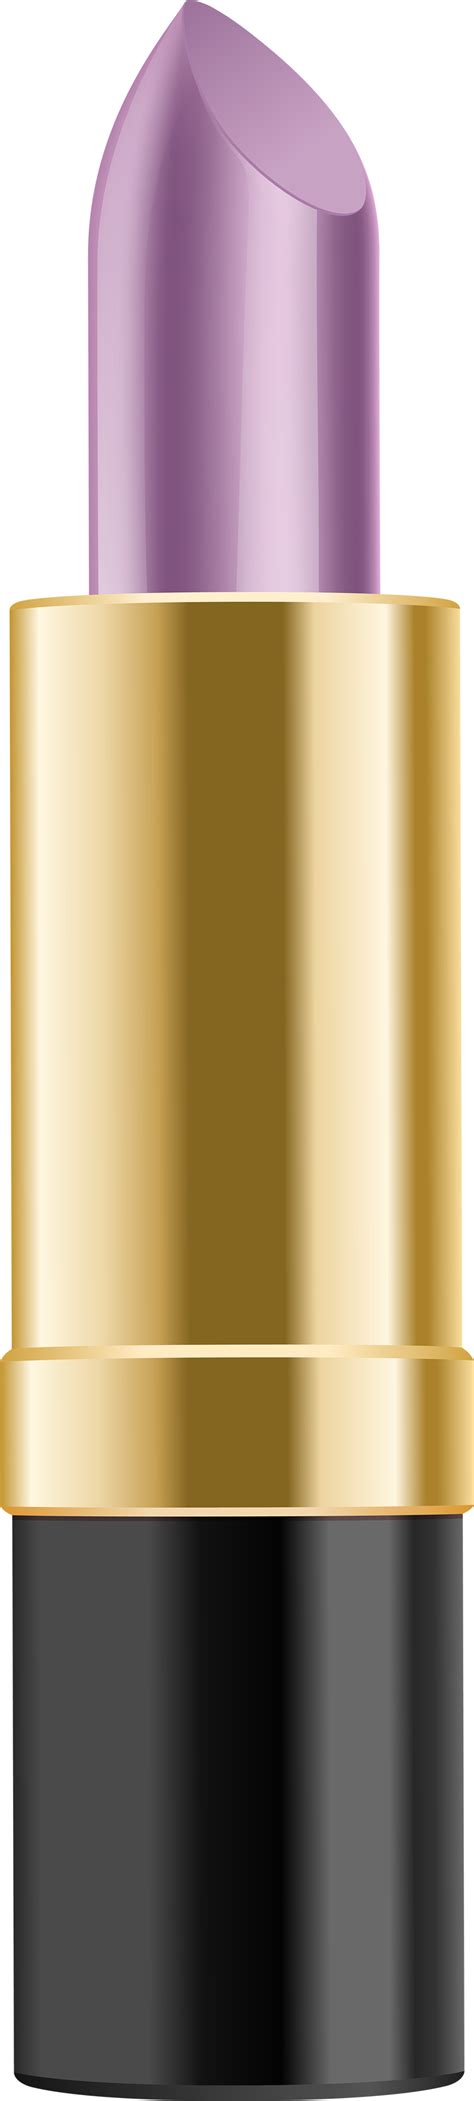 Lipstick Png Transparent Image Download Size 801x3551px